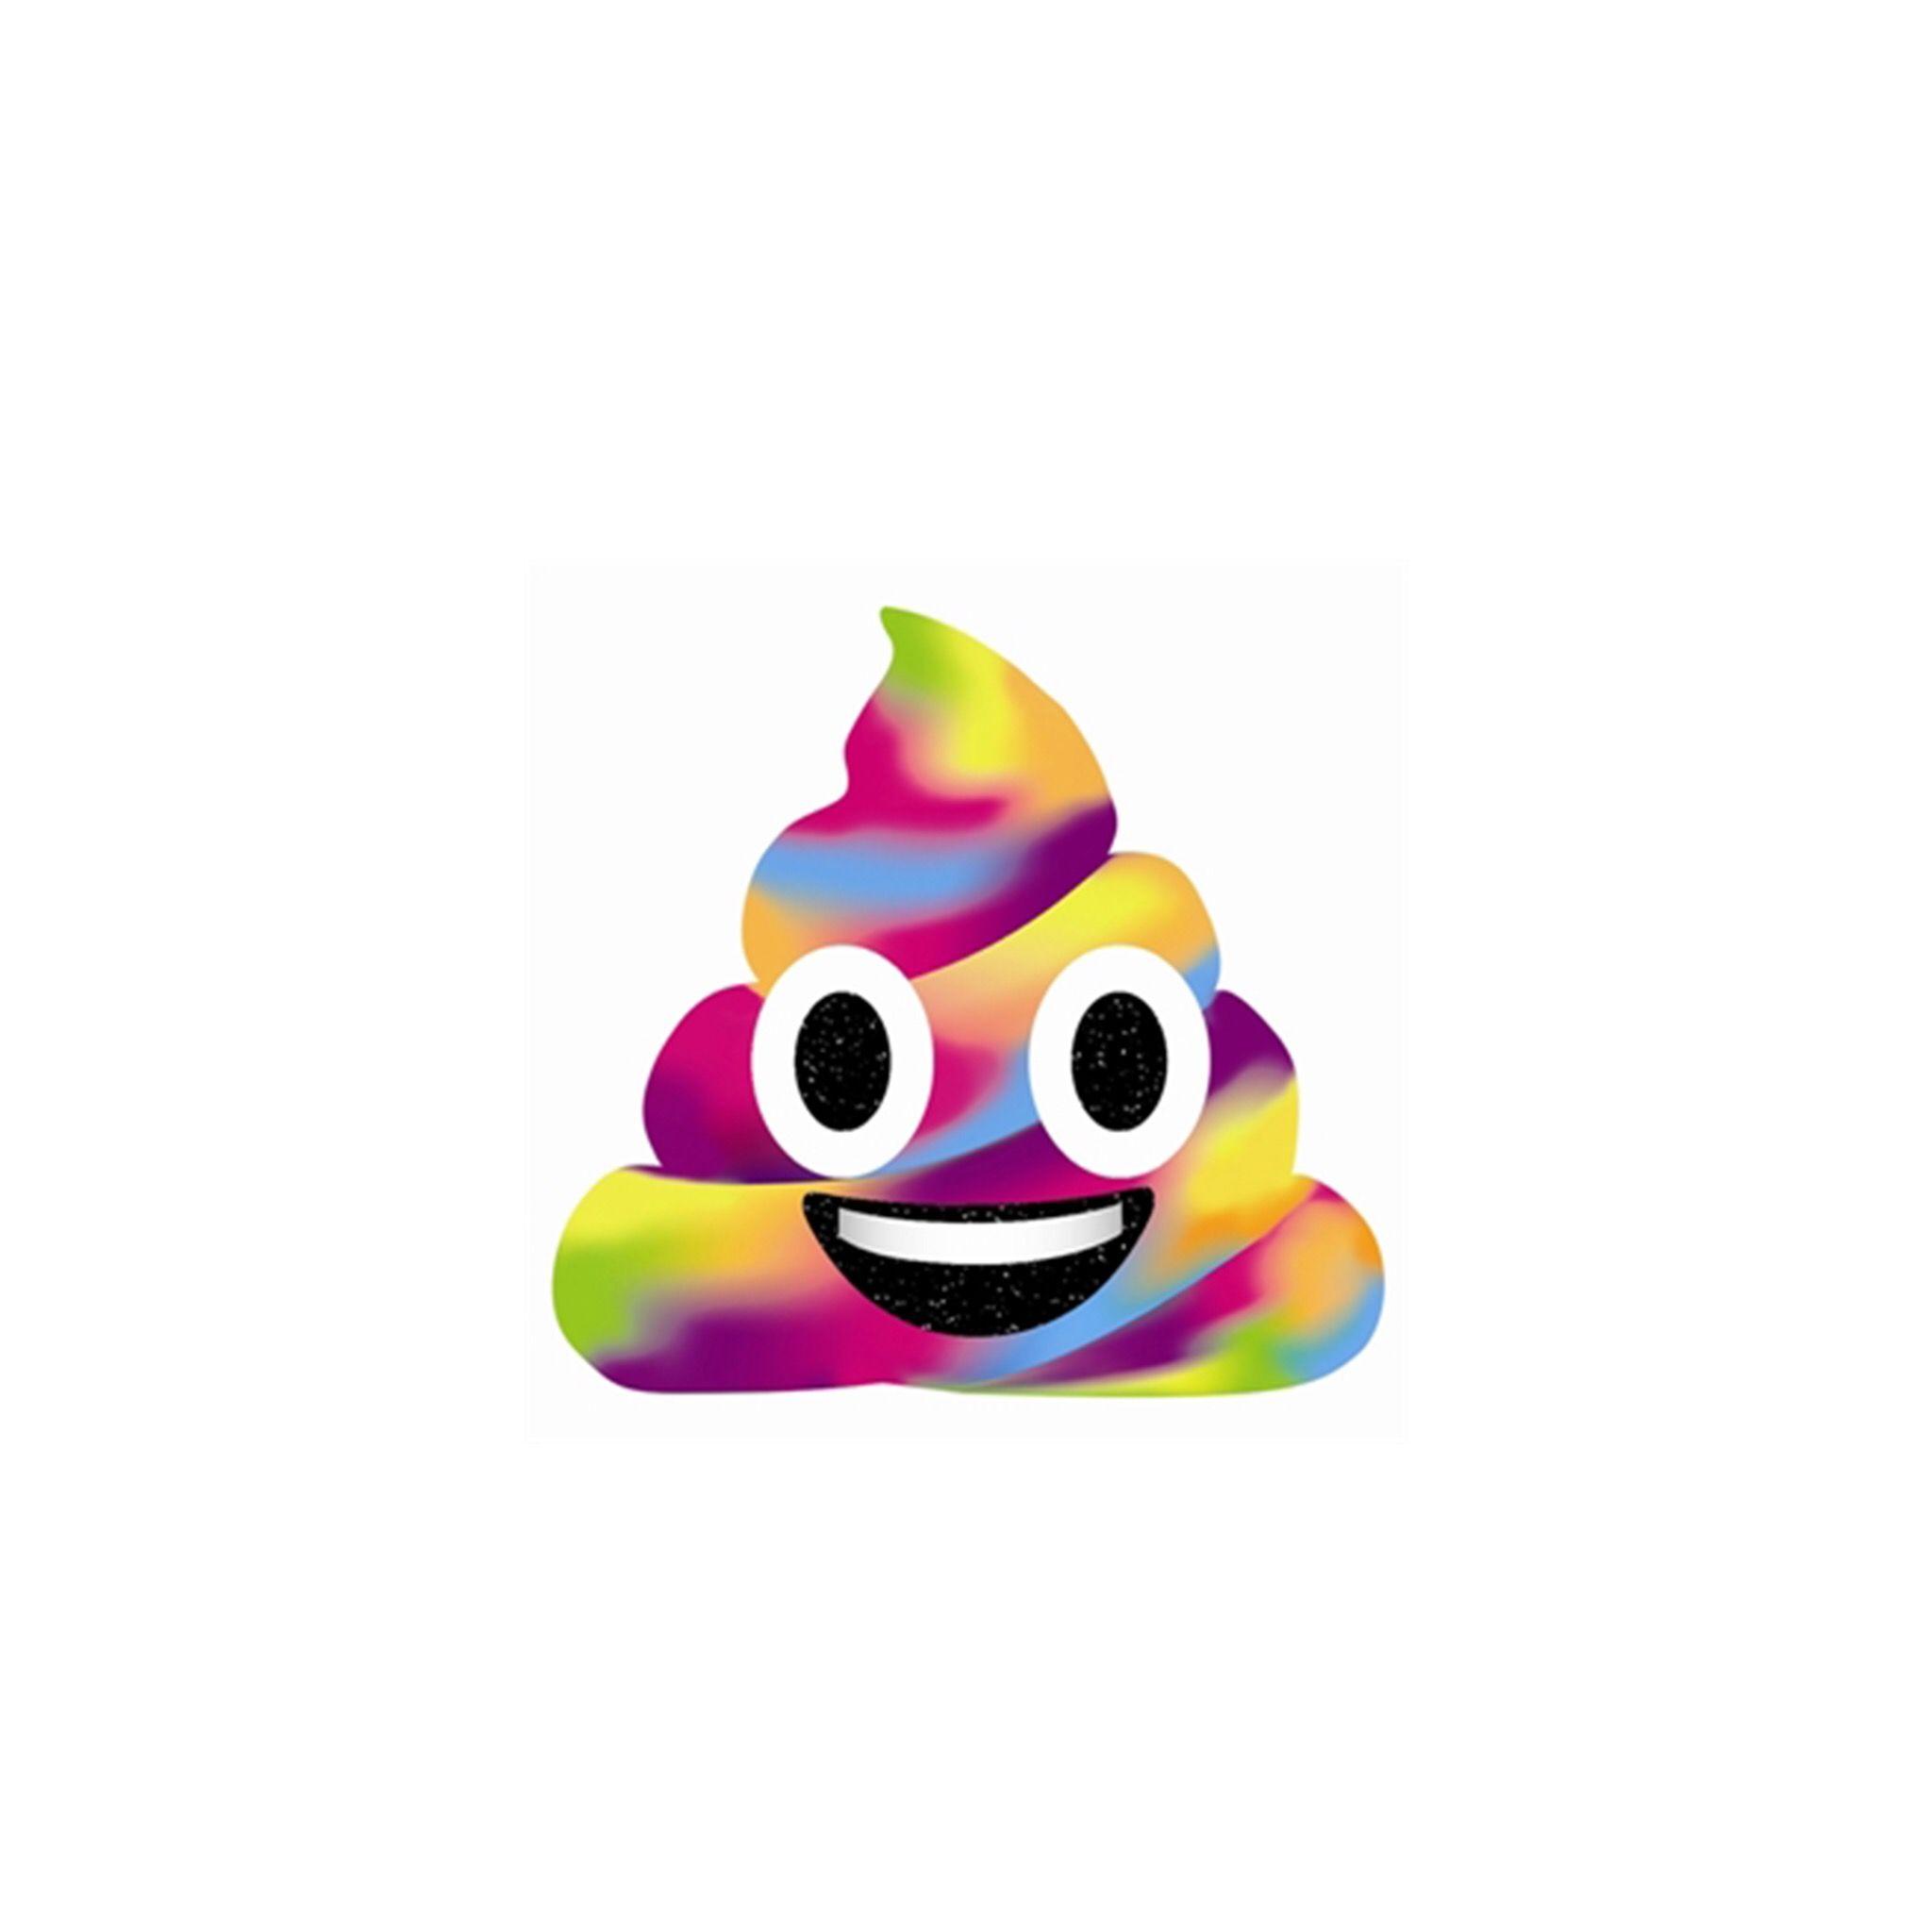 Rainbow poop emoji. random stuff. Emoji and Rainbows